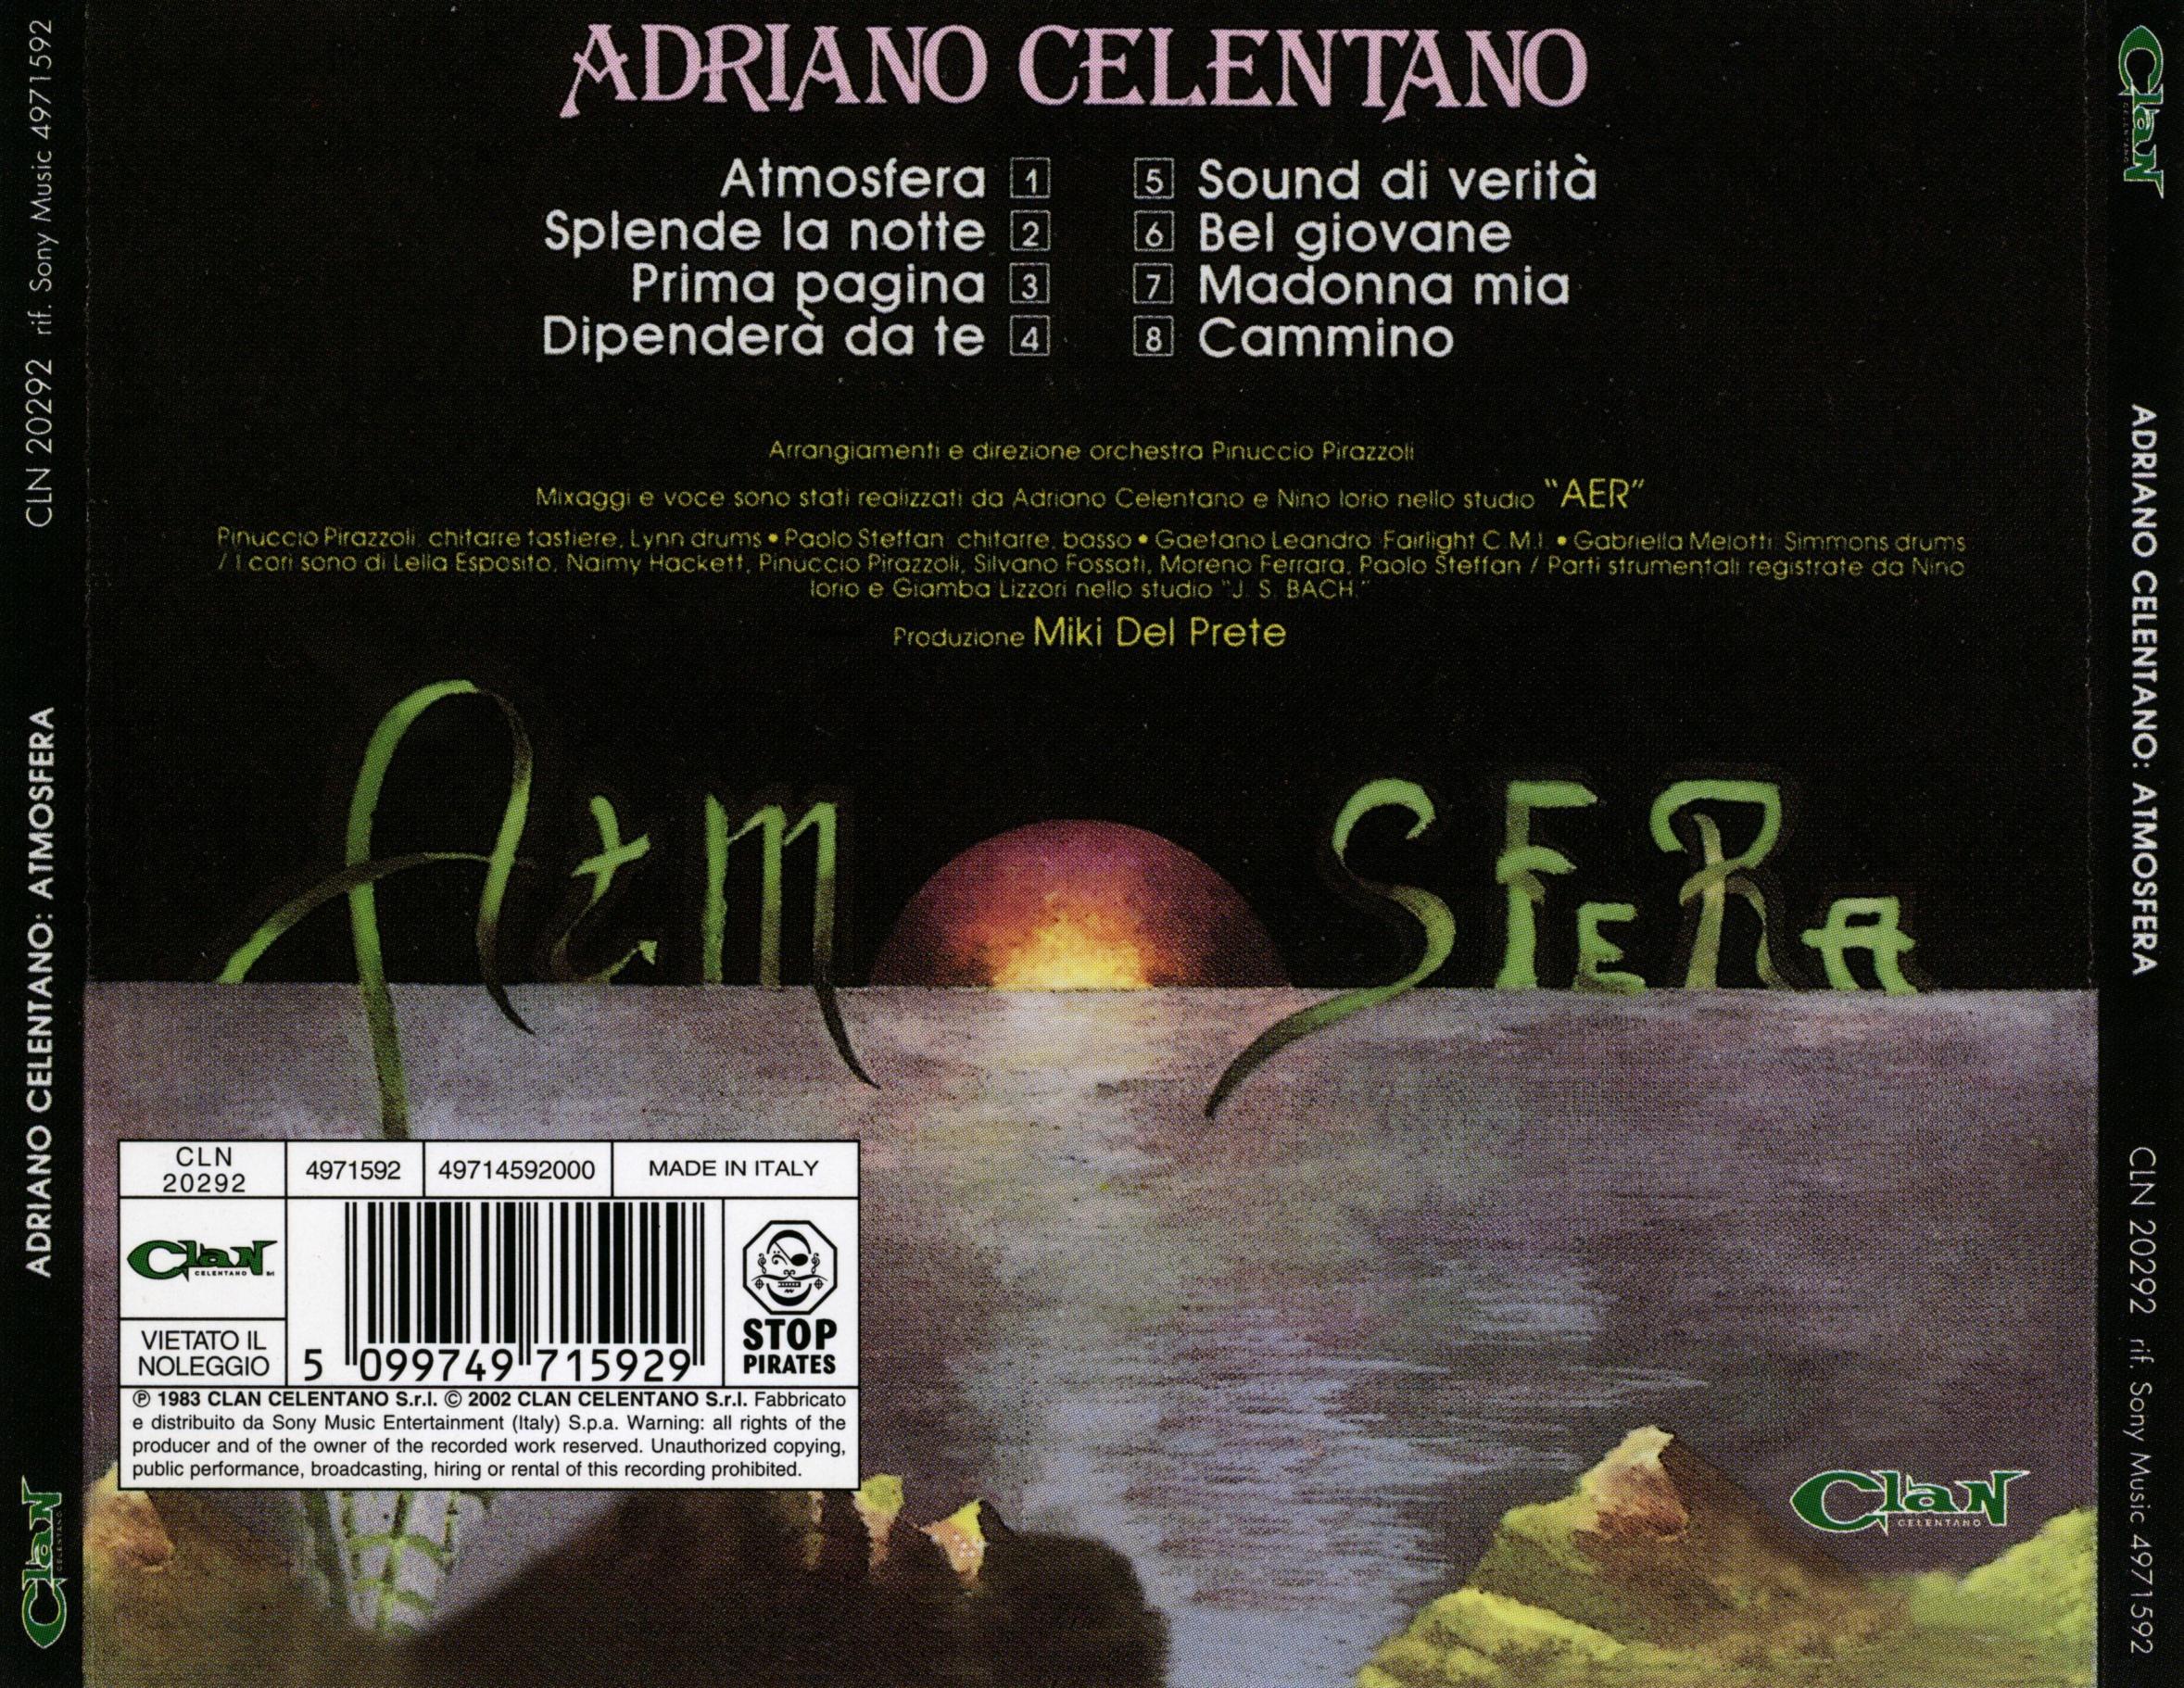 Copertina cd Adriano Celentano - Atmosfera - Back, cover cd Adriano ...